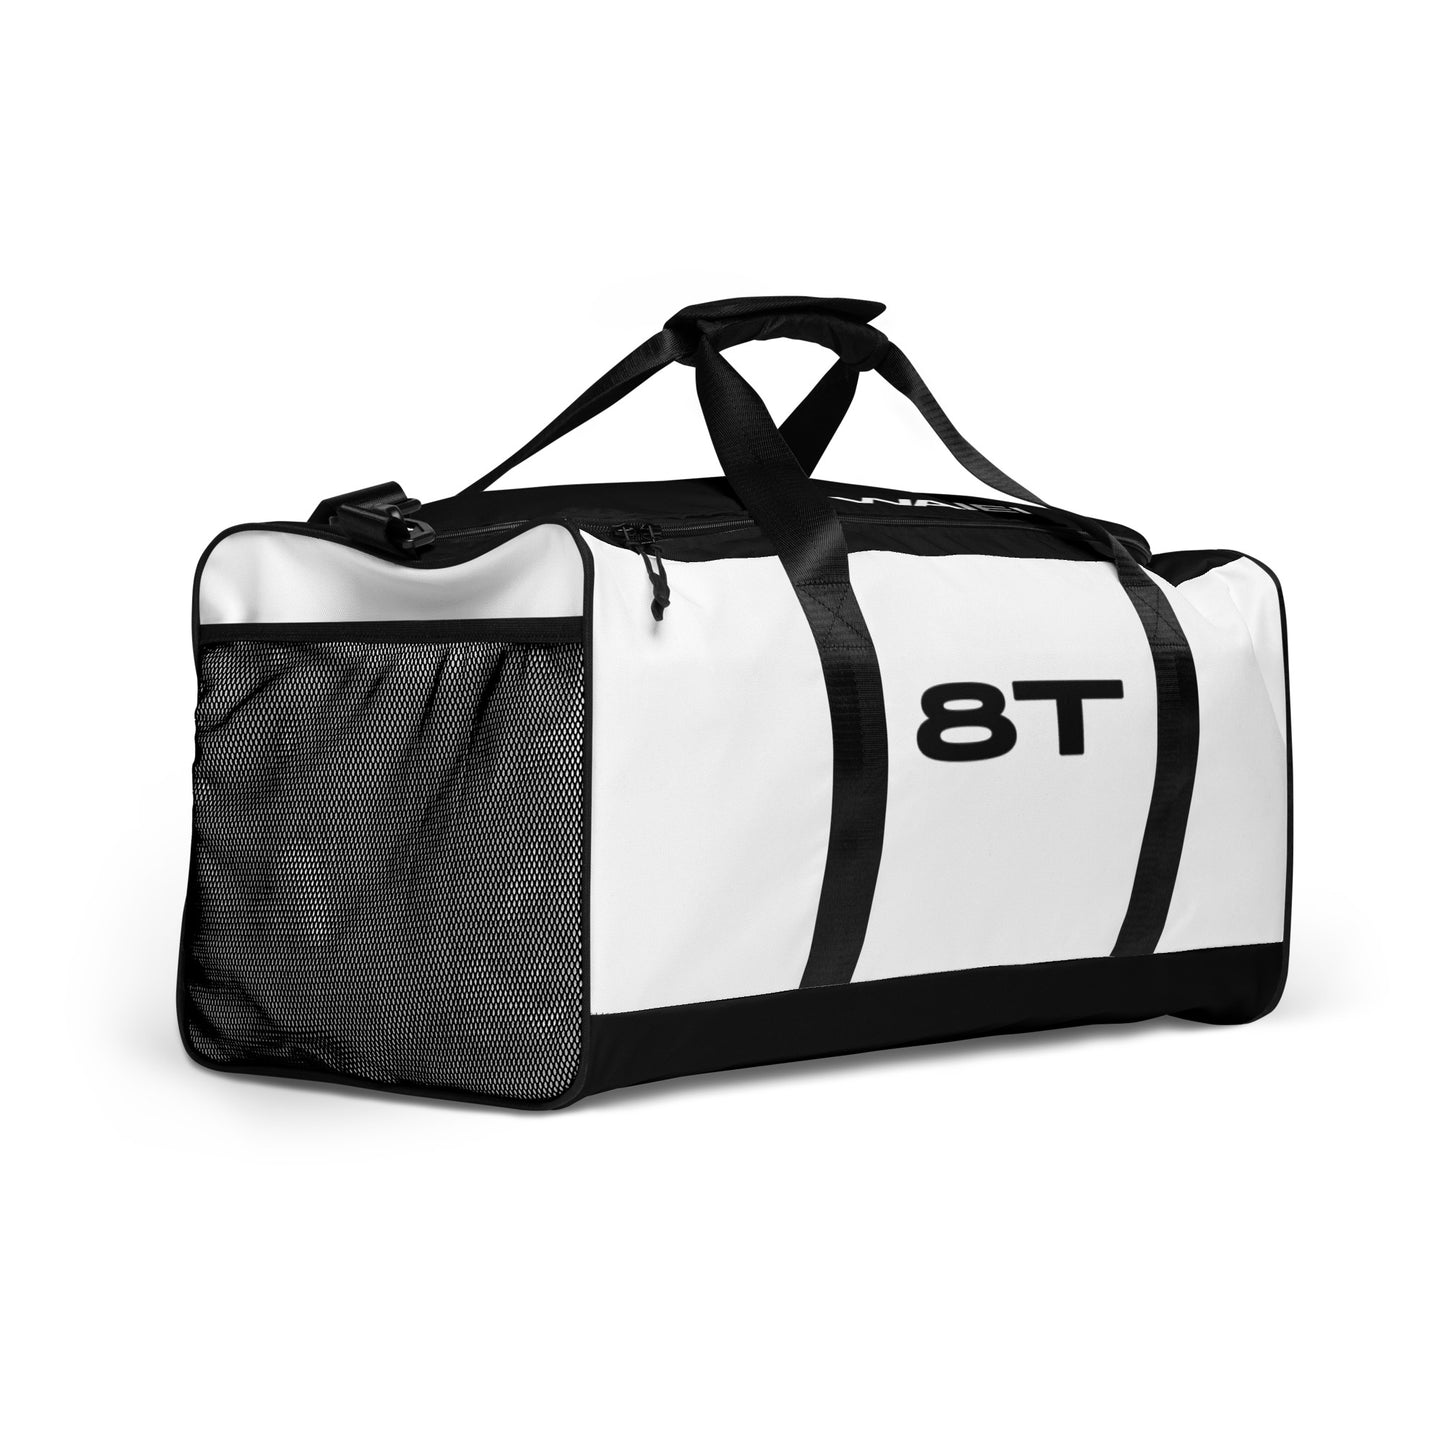 8T Sport Bag